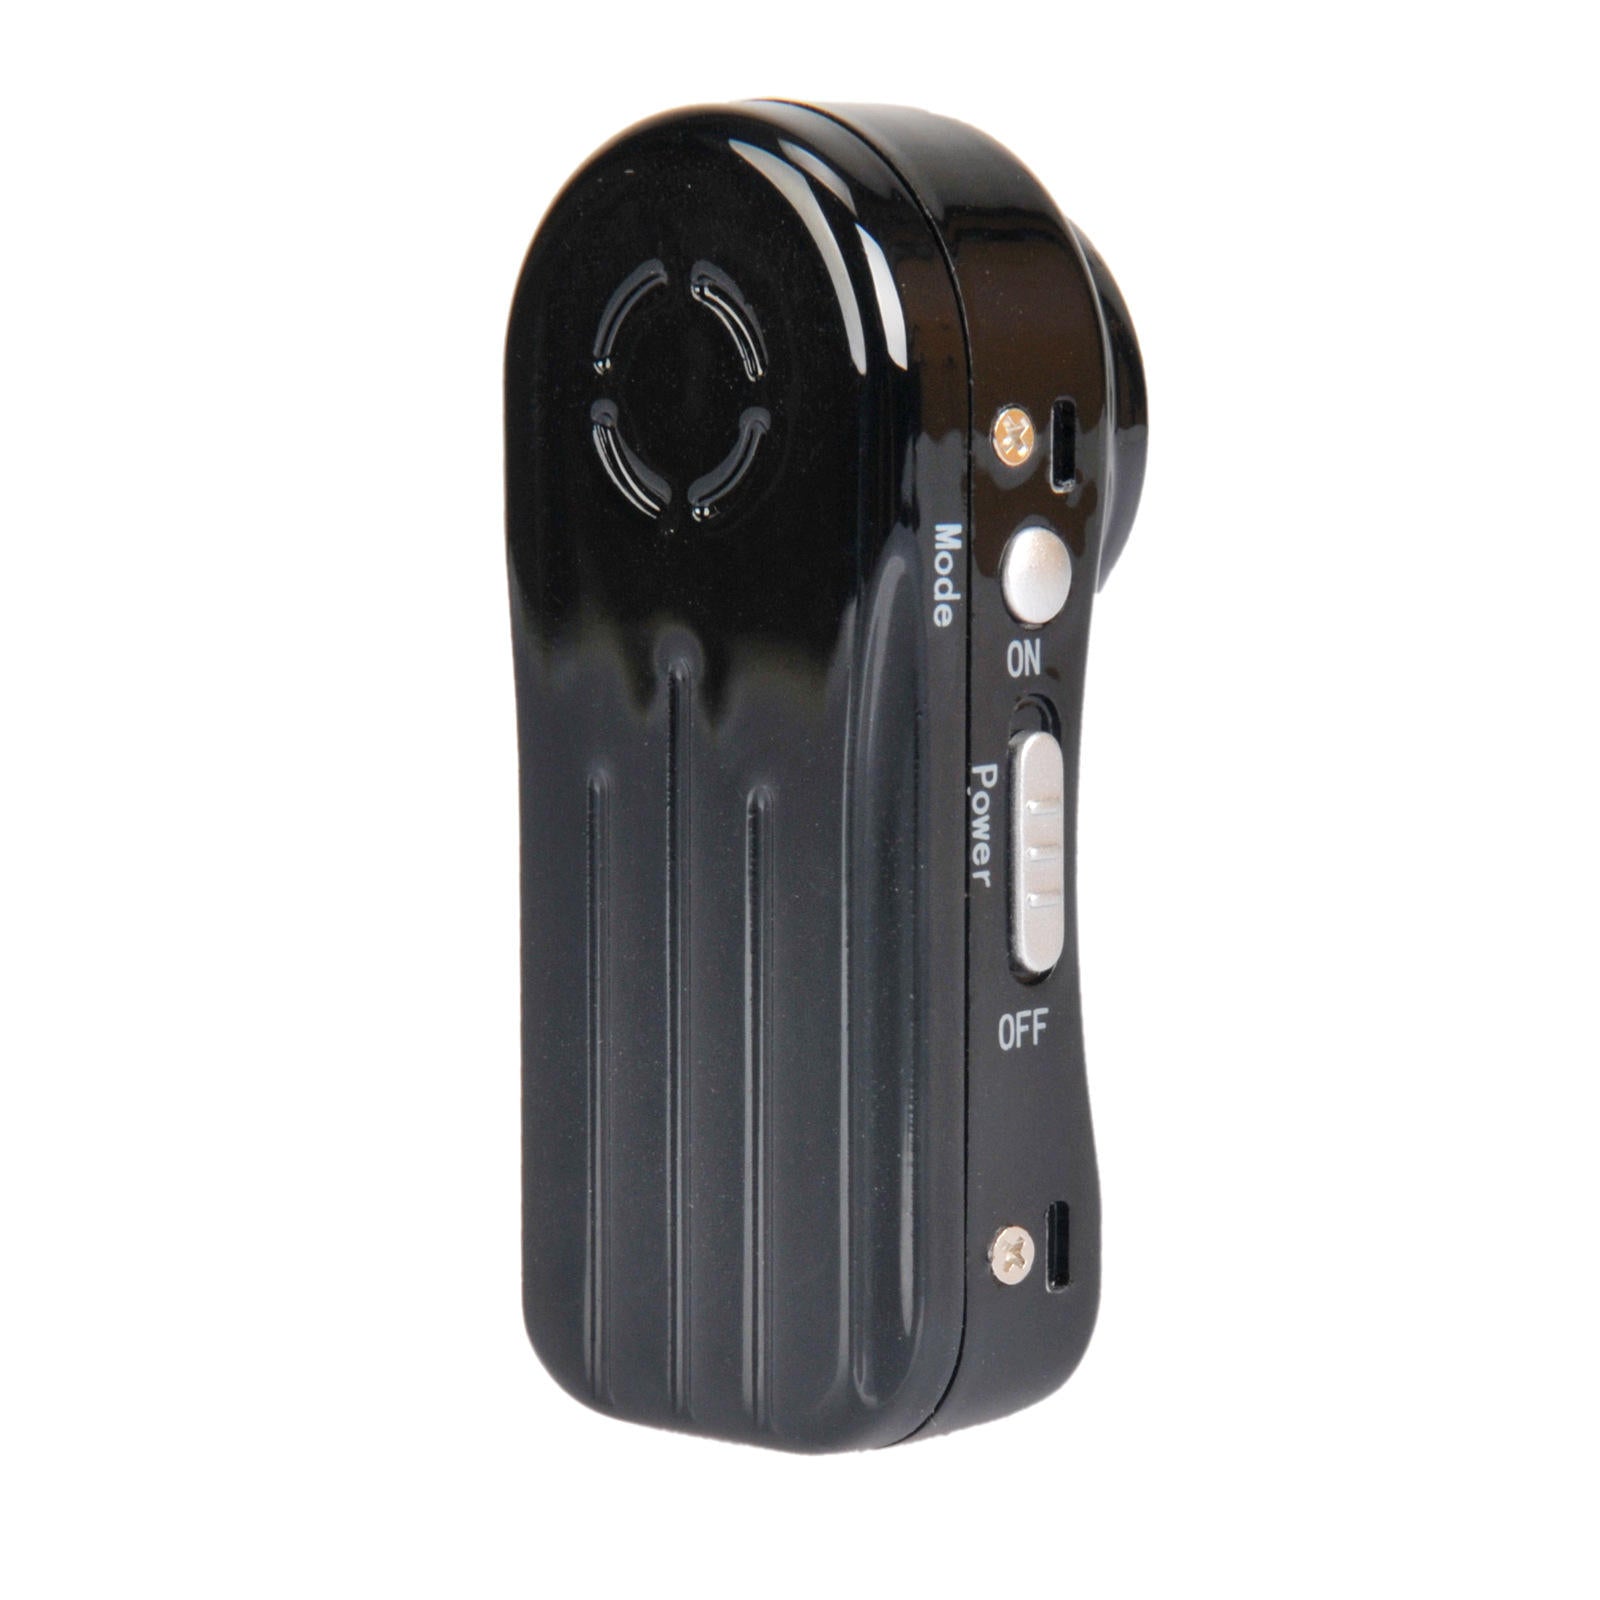 XANES MD81S-6 480P Mini Camera Vlog Camera for Youtube Recording FPV Camera Infrared Night Vision Network Camera DV DVR Wireless IP Camera Loop Video Recorder